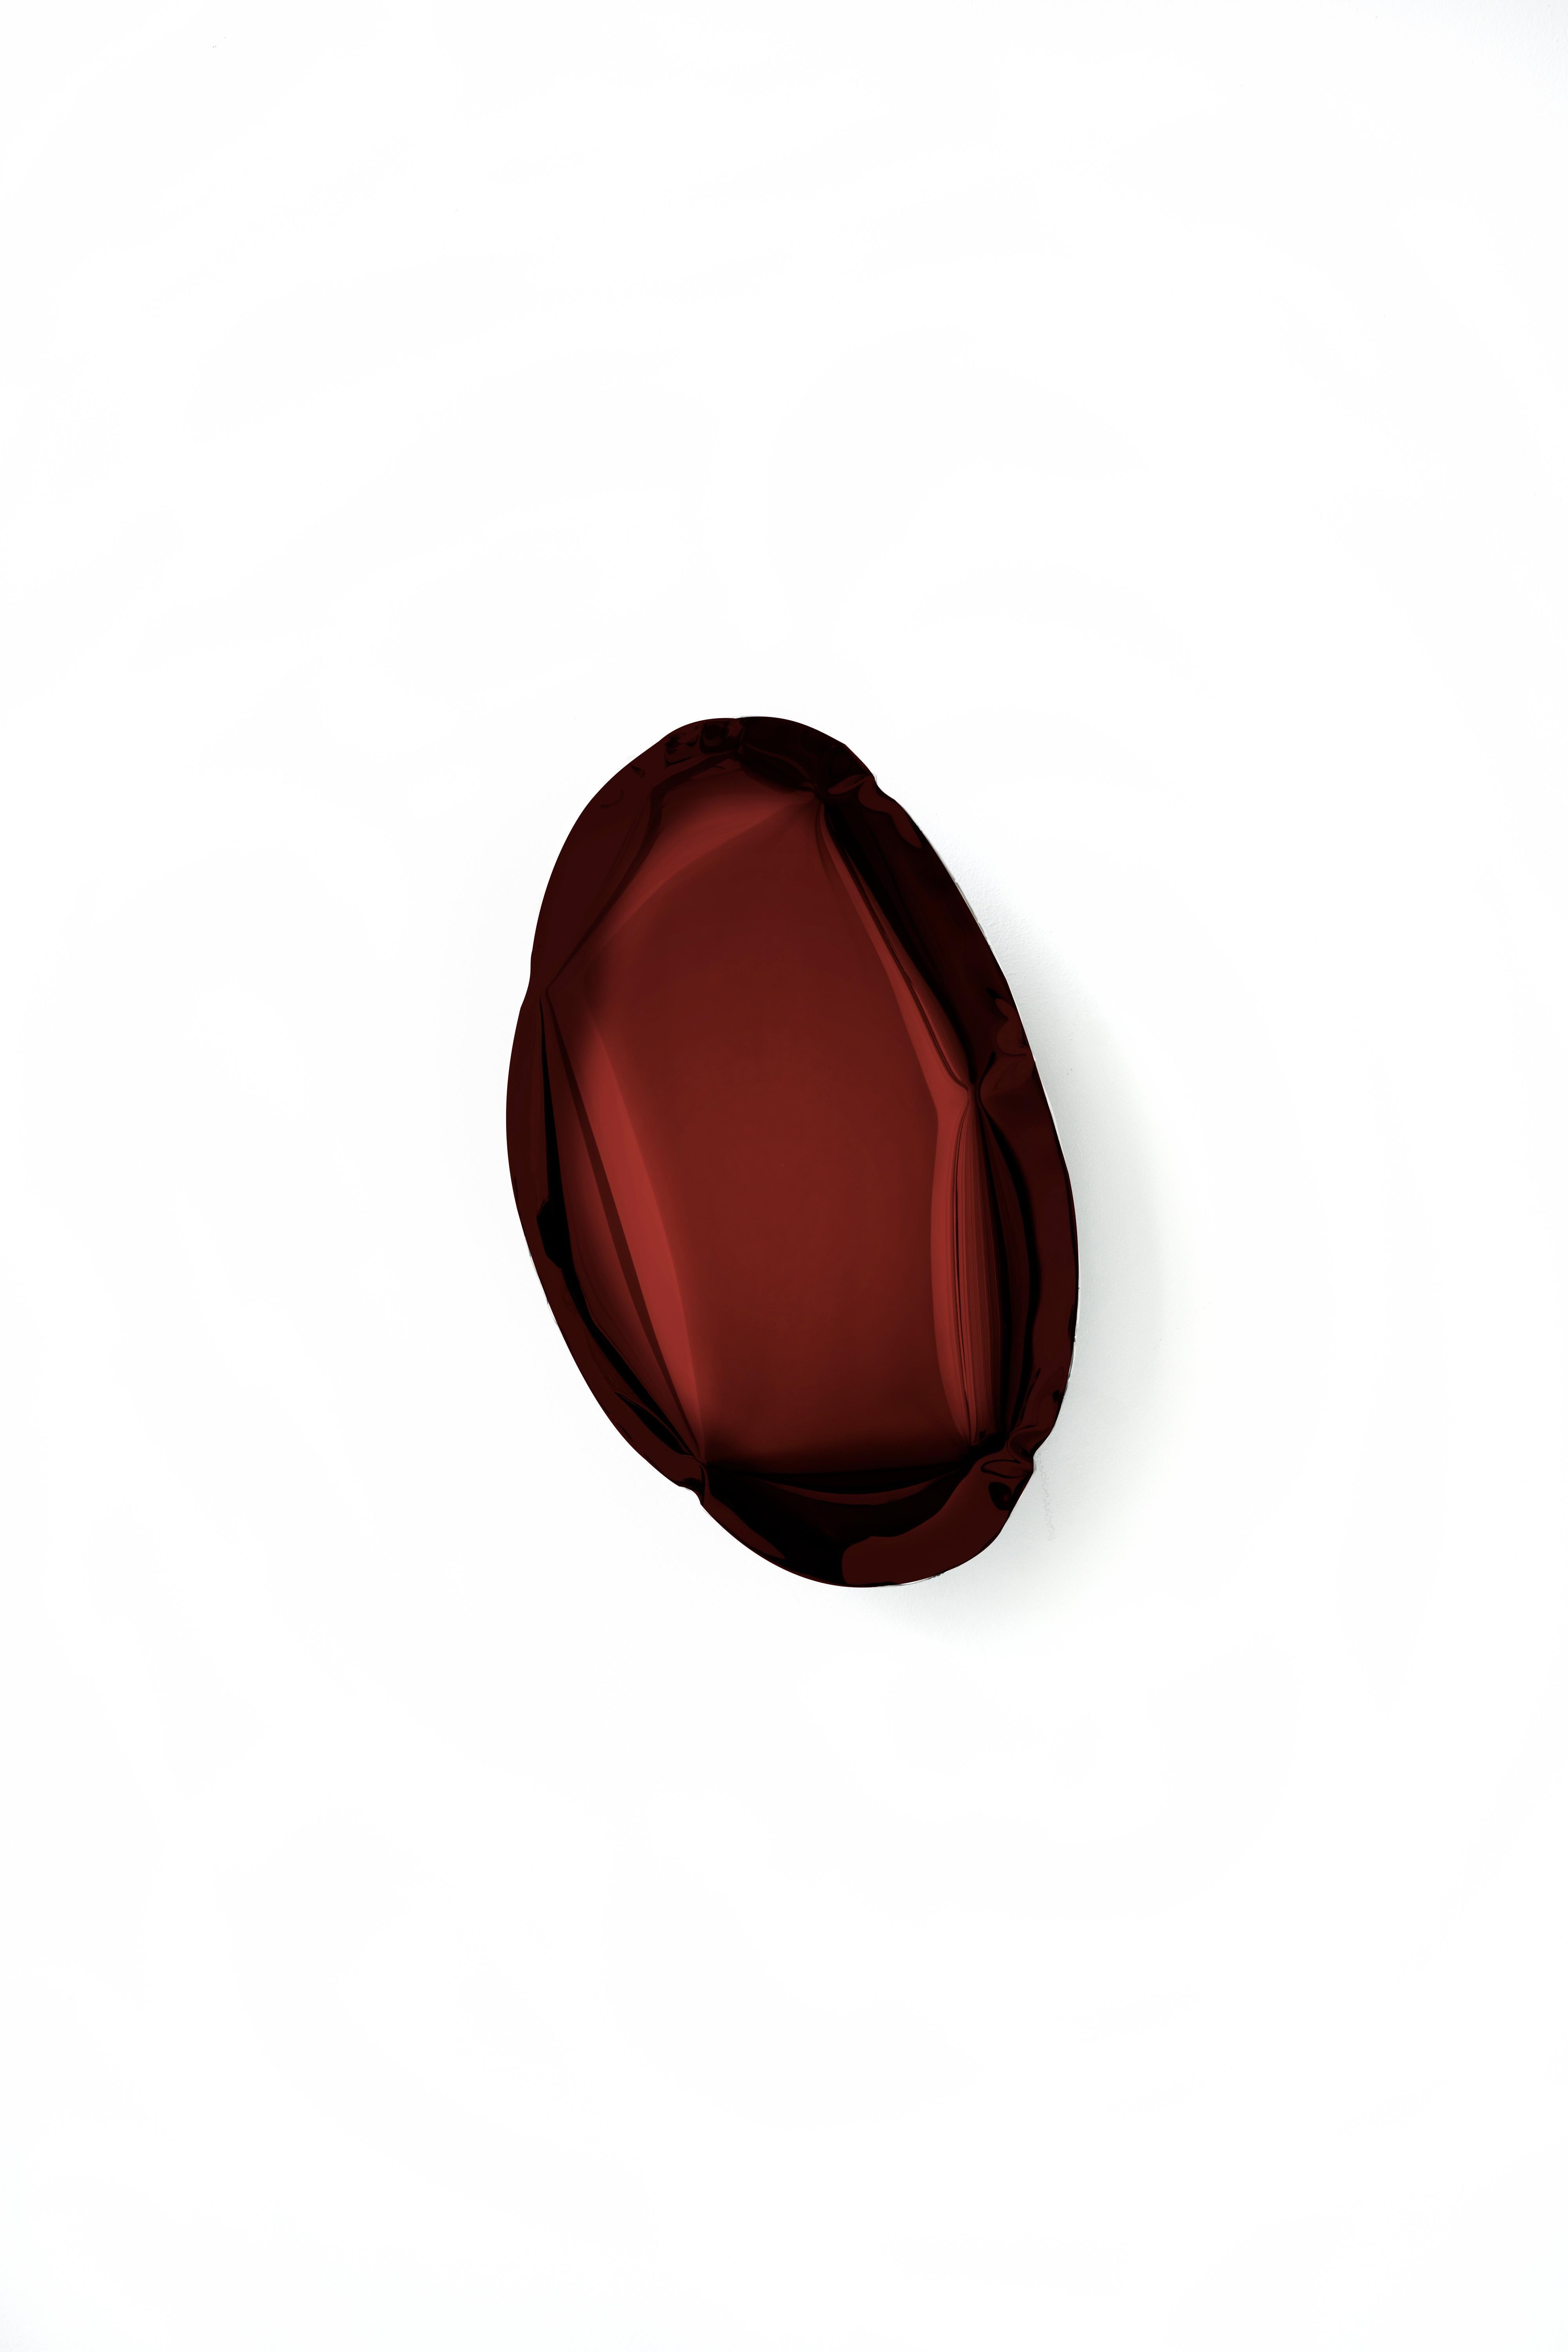 Mirror Tafla O3 Rubin Red, in Polished Stainless Steel by Zieta For Sale 1